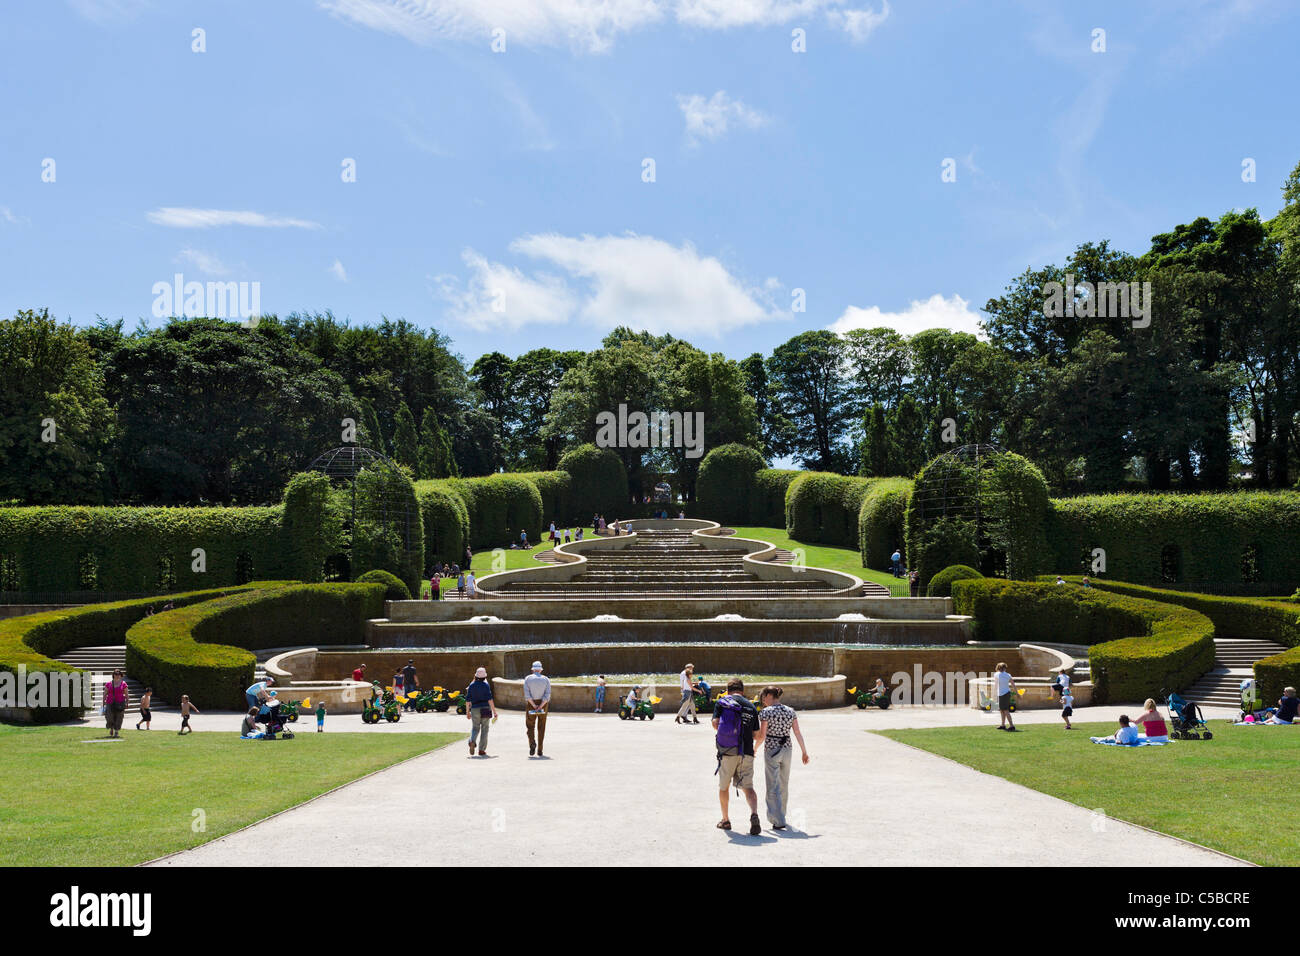 Die große Kaskade, Alnwick Garden, Alnwick Castle, Alnwick, Northumberland, Nord-Ost-England, UK Stockfoto